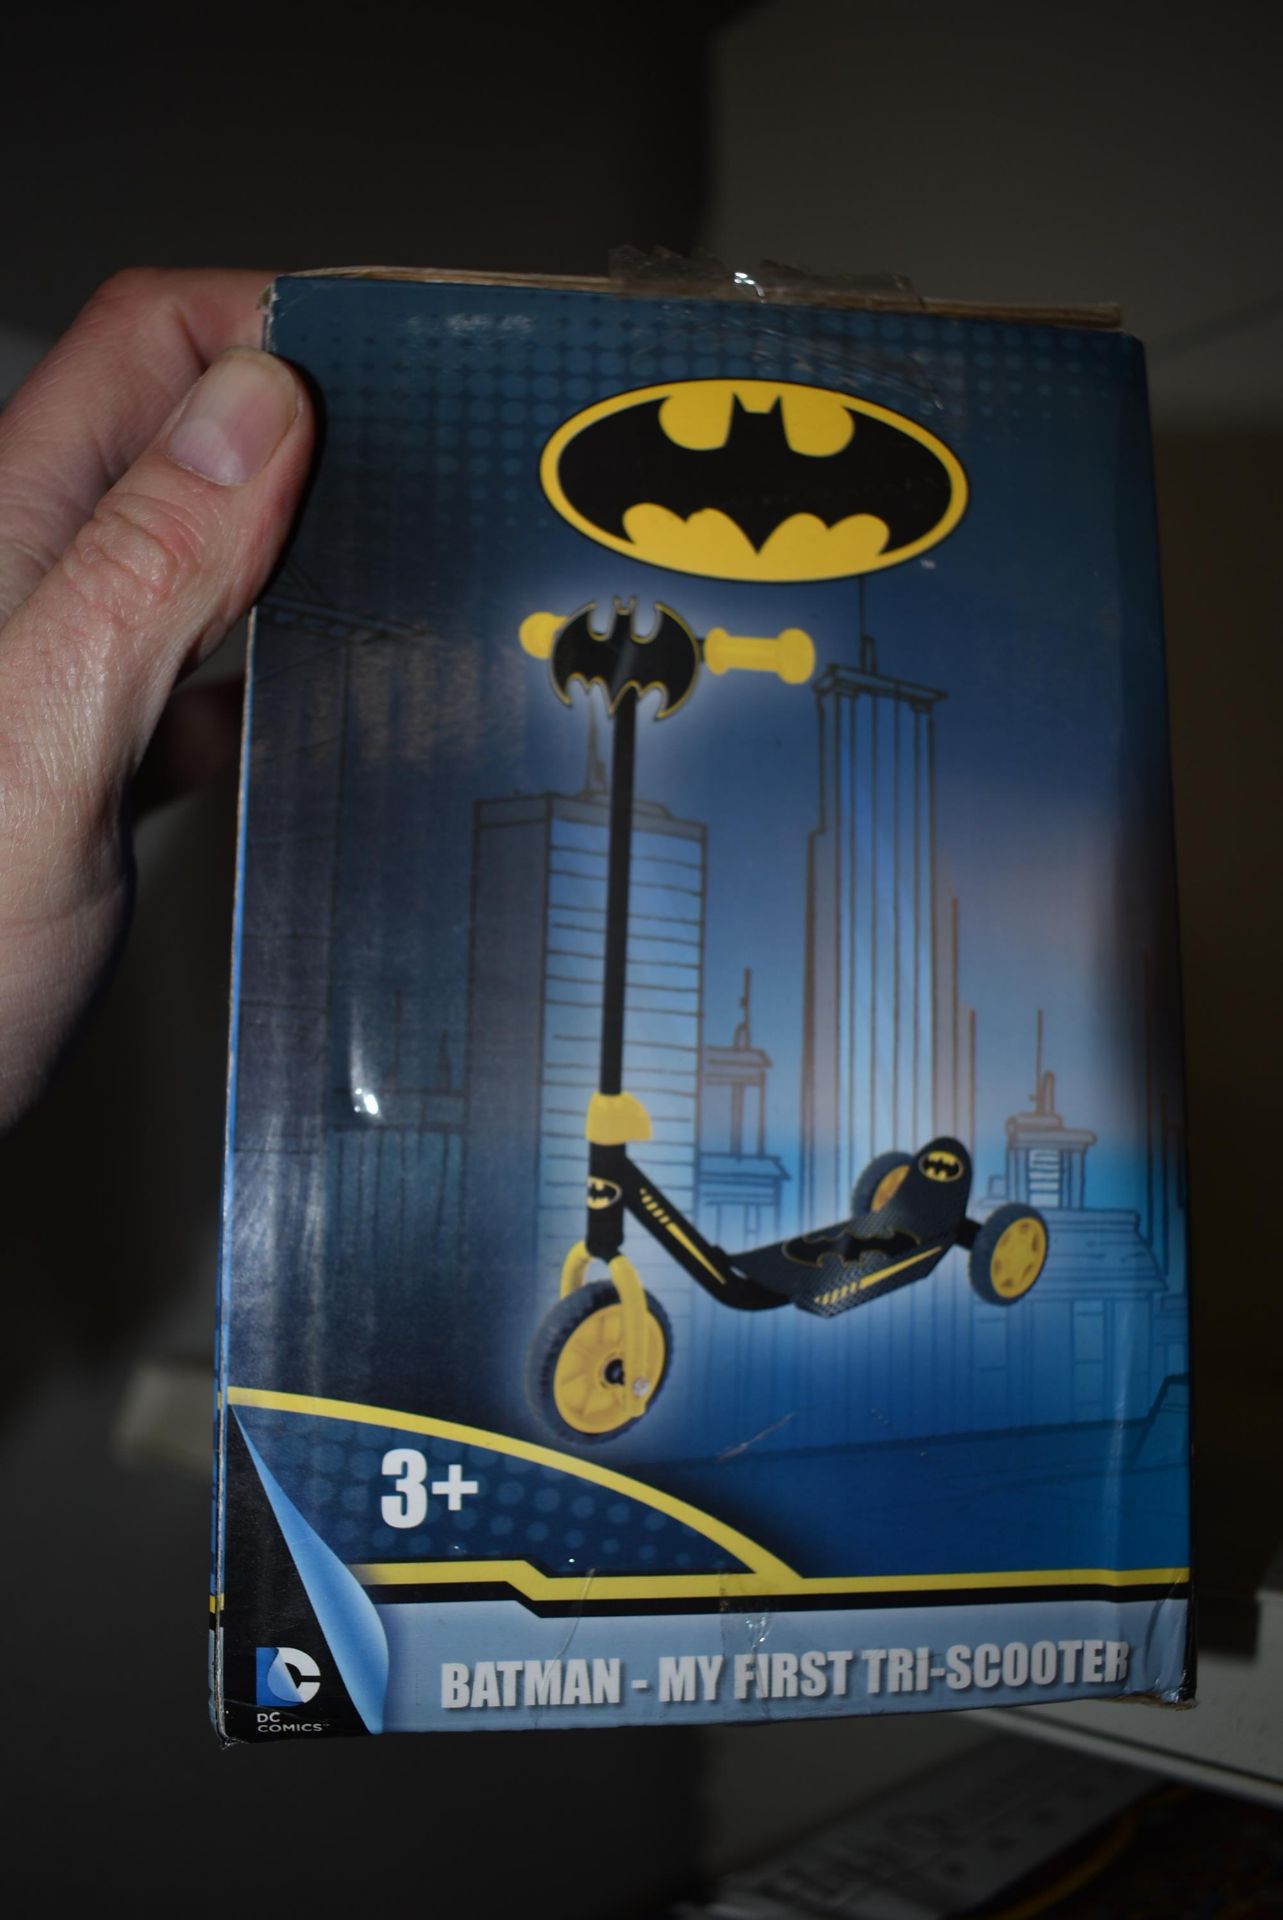 Batman Tri-Scooter - Image 4 of 4